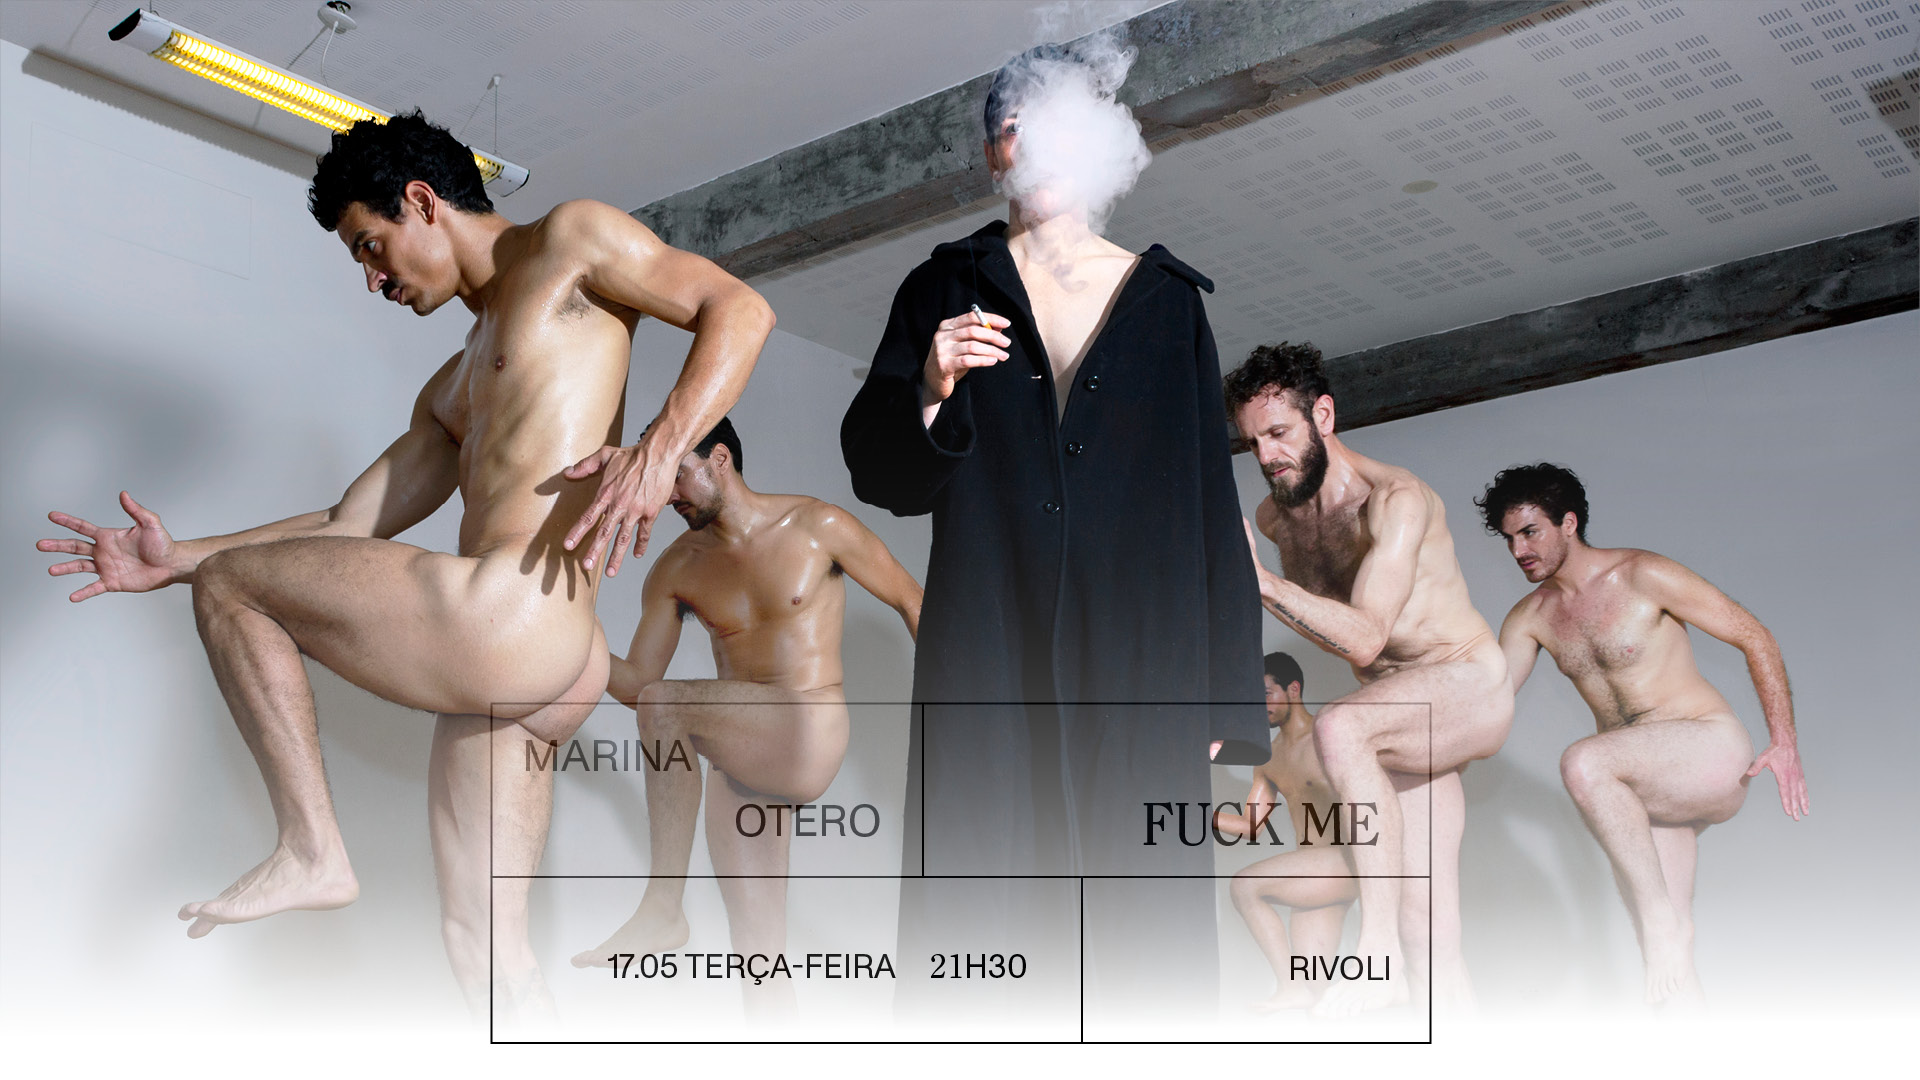 Fuck me • MARINA OTERO | FITEI 45